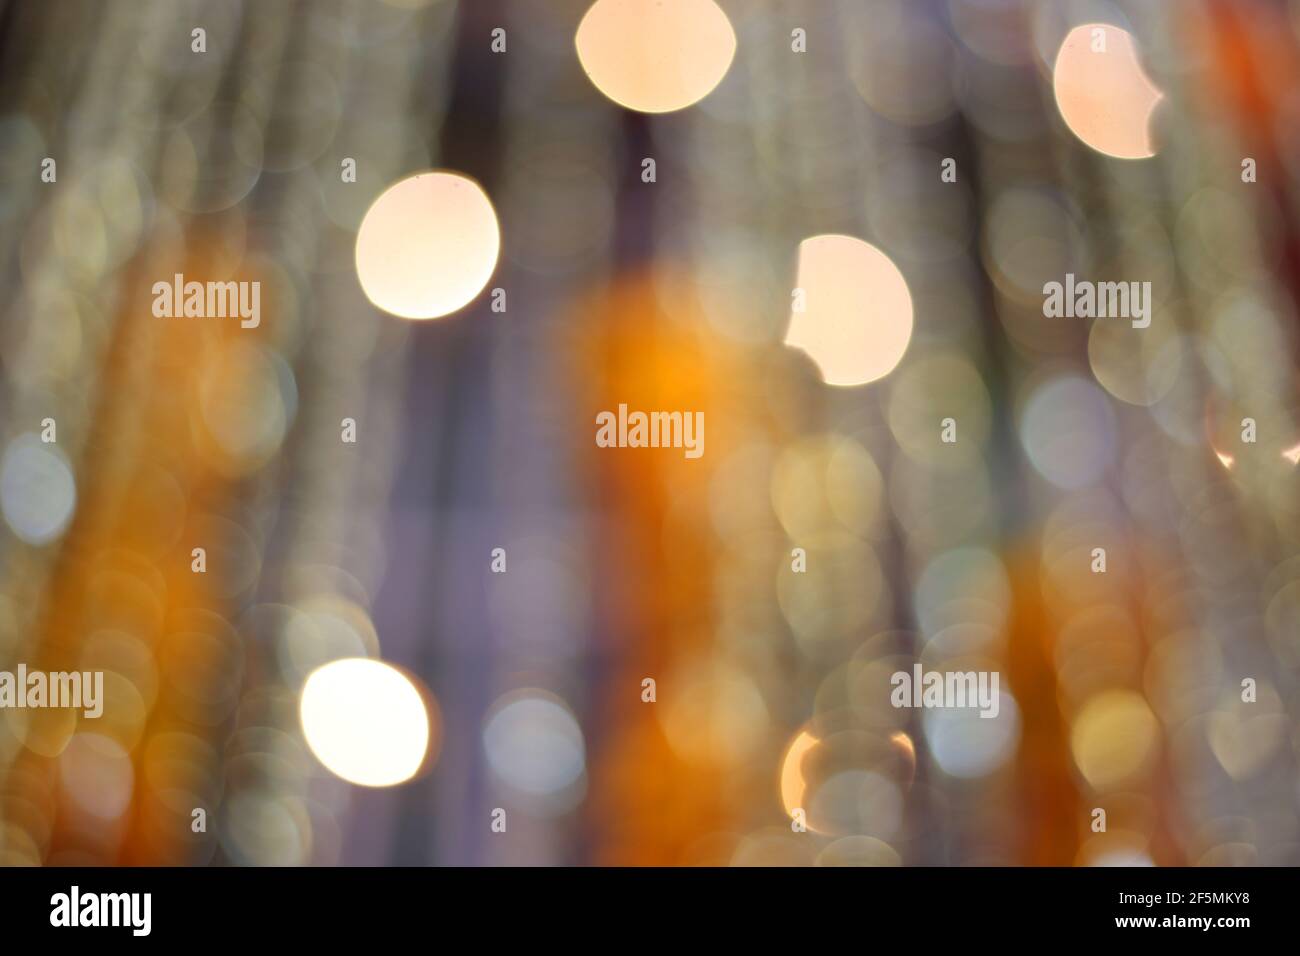 Illuminated defocused background Stock Photo